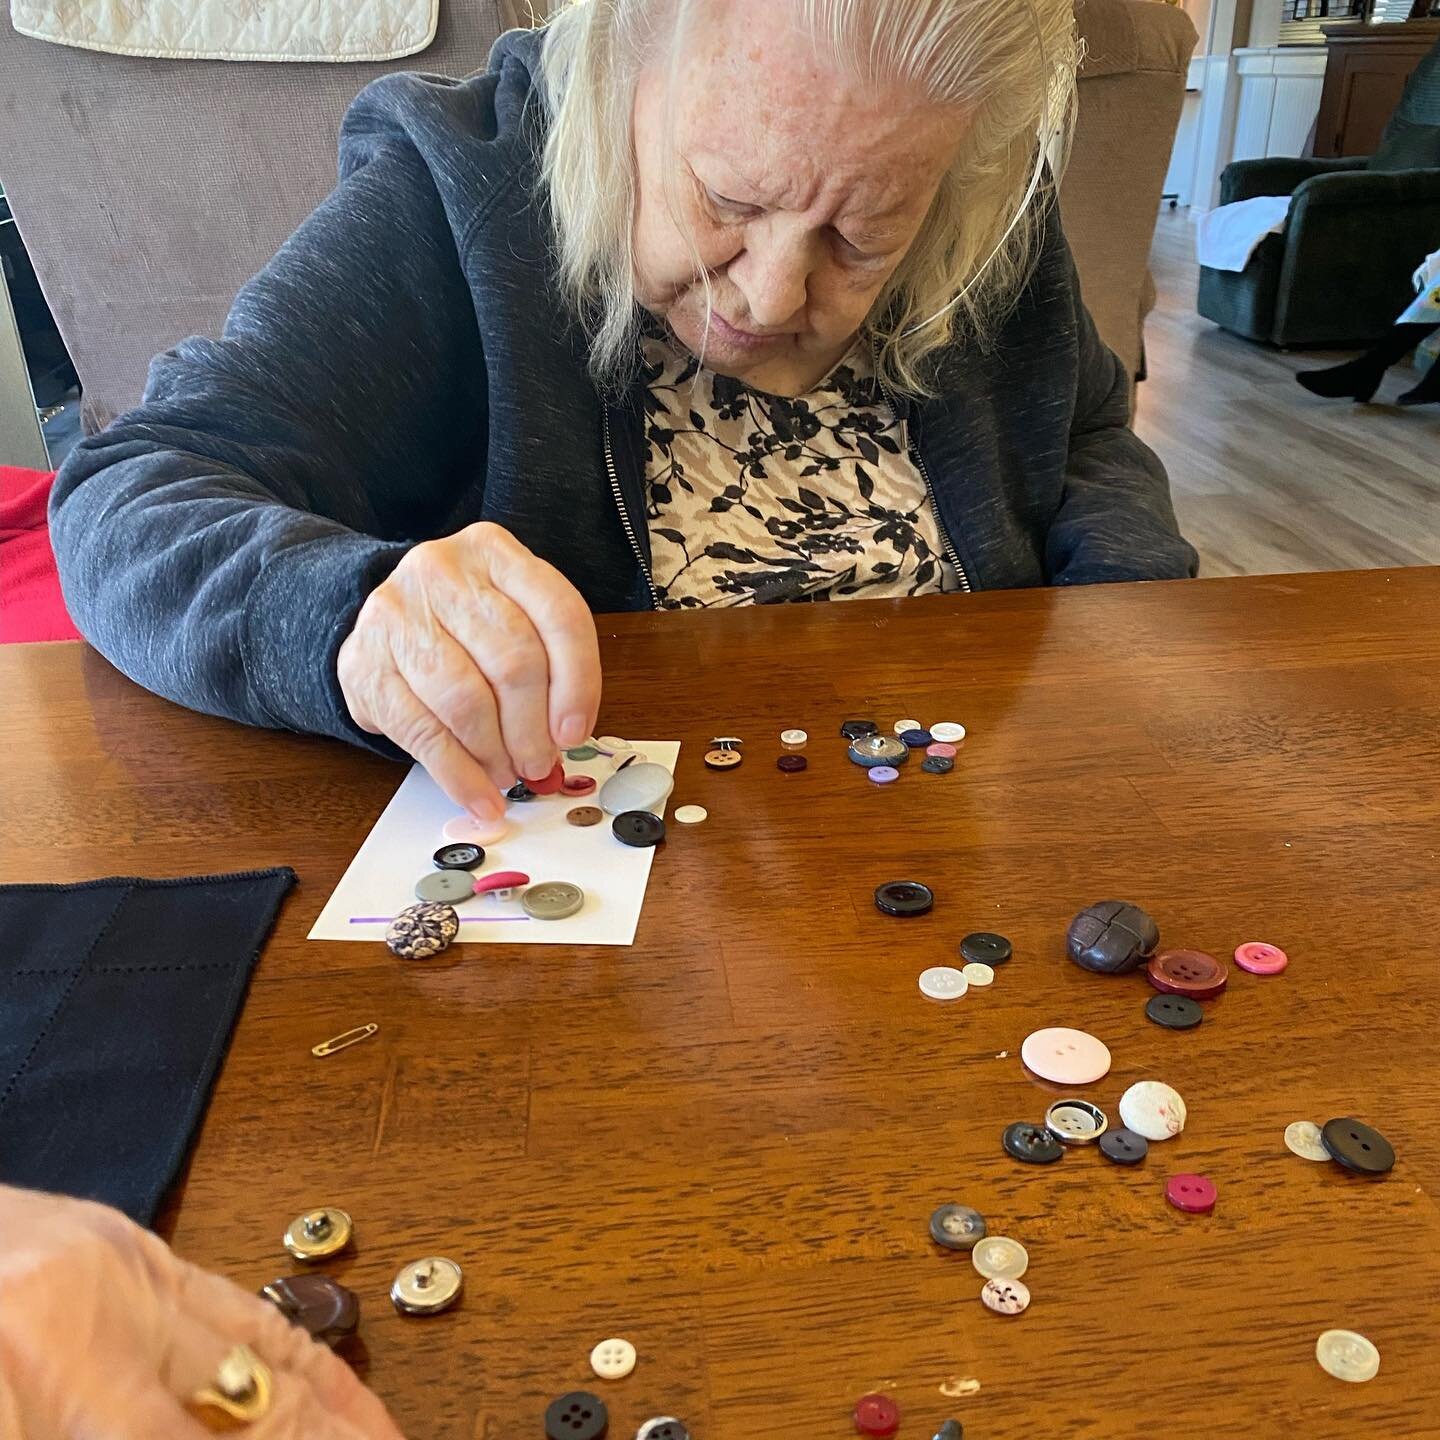 Button, button, who&rsquo;s got the button? 

Mission Villa 
321 W. Mission St. 
Santa Barbara, CA 93101 
(805) 898-2709 
.
.
.
.
.
#braingames #seniorliving #seniorcare #dementia #dementiacare #alzheimers #alzheimersawareness #assistedliving #assist